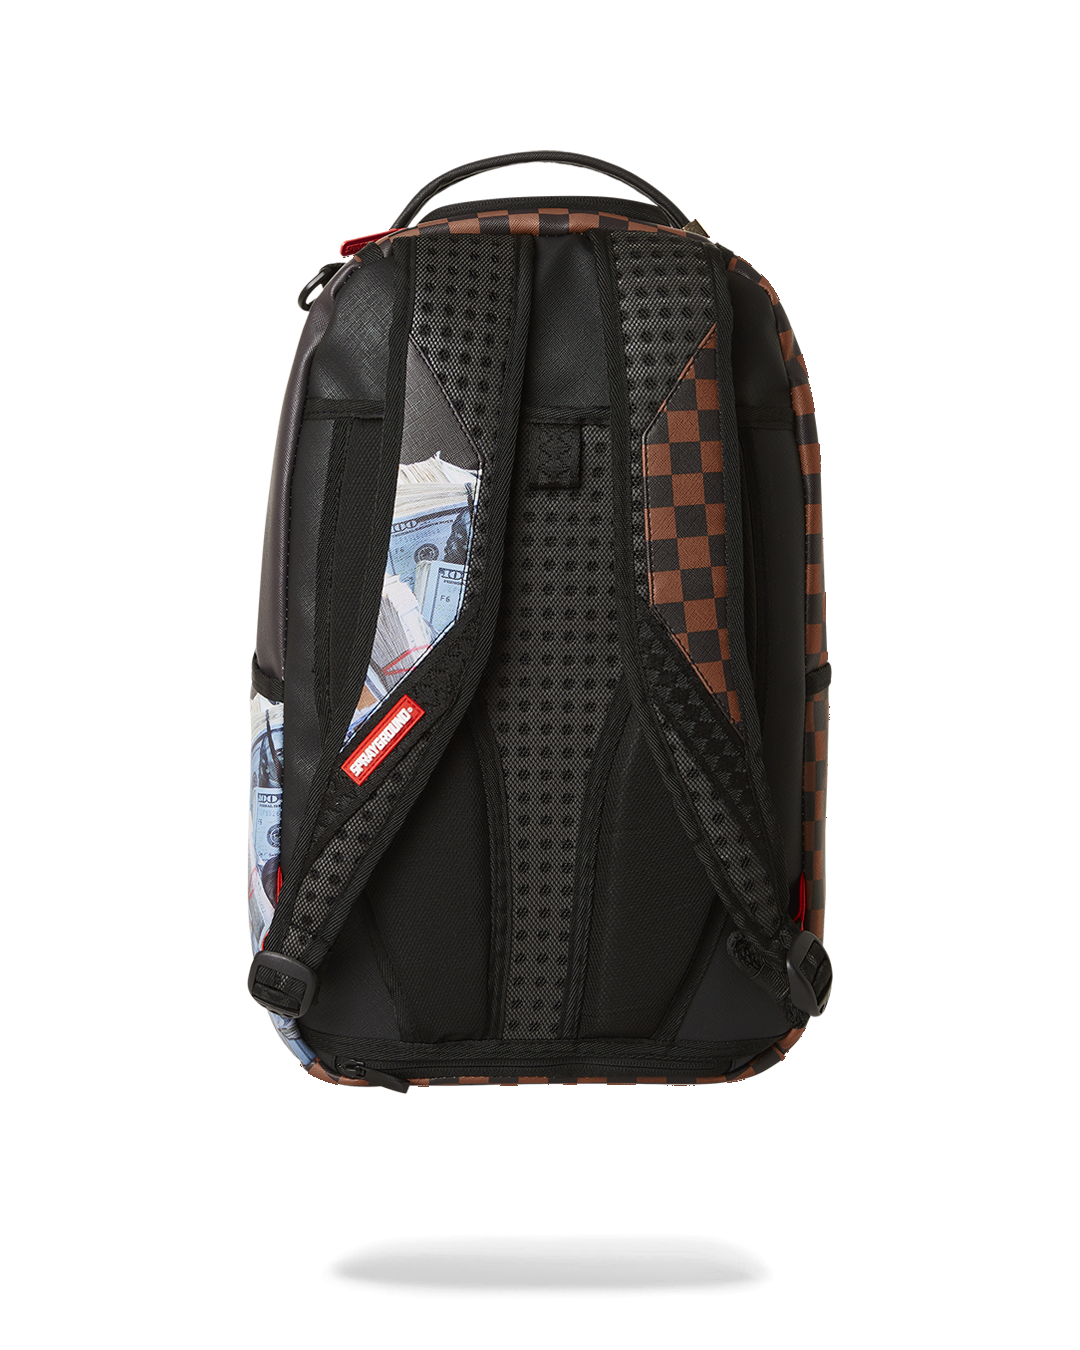 Sprayground Announces Limited 'How High' Edition Backpack